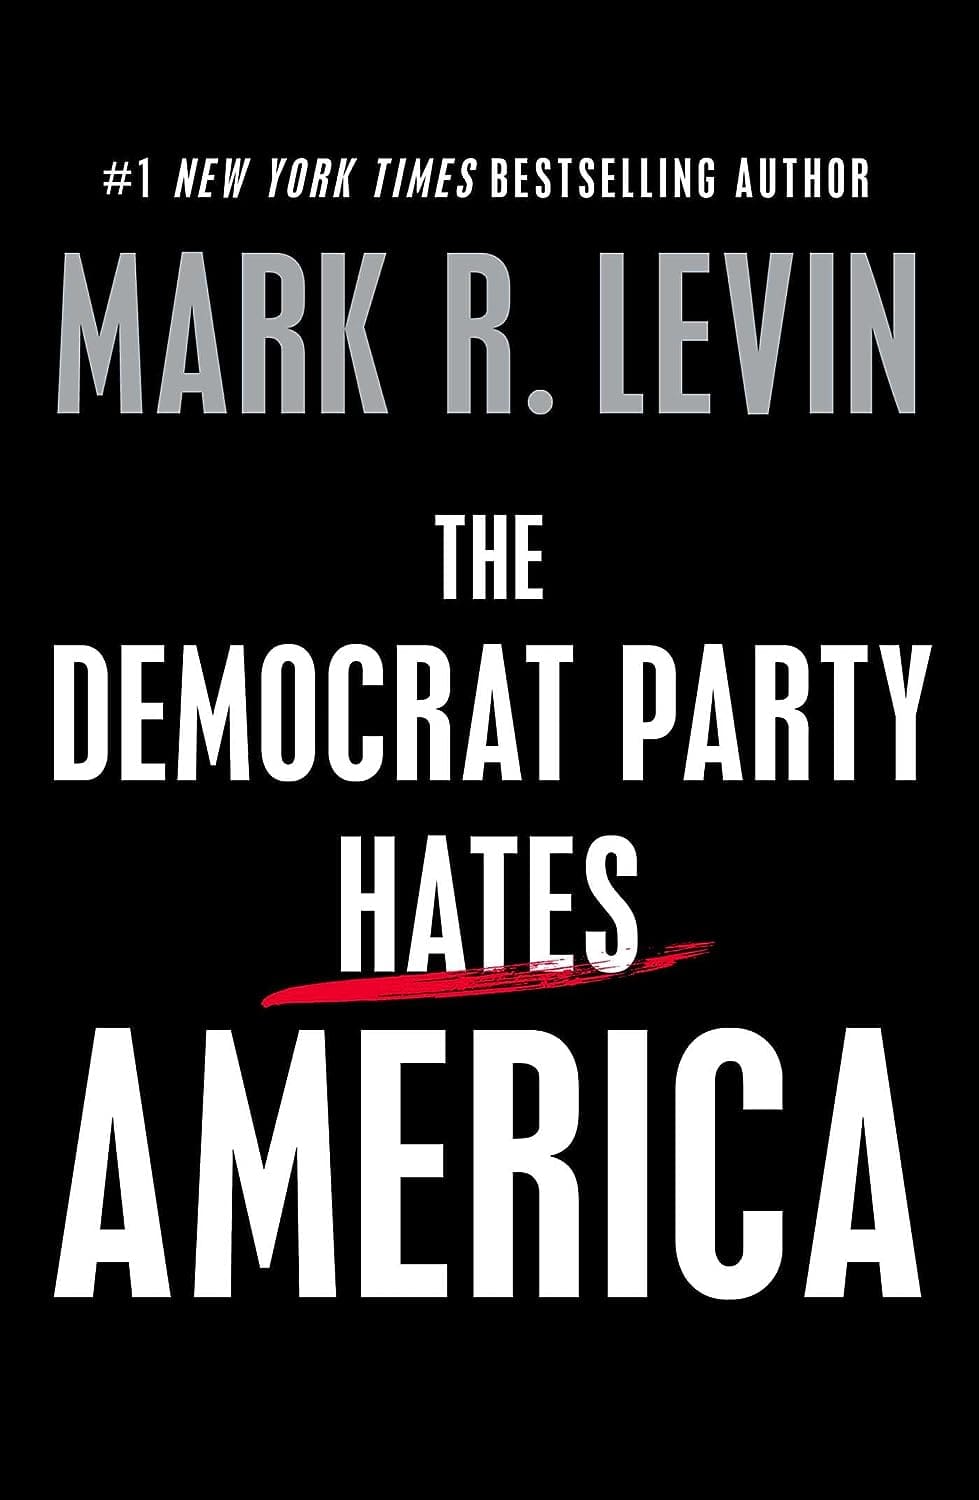 Mark levin new book : The Democrat Party Hates America